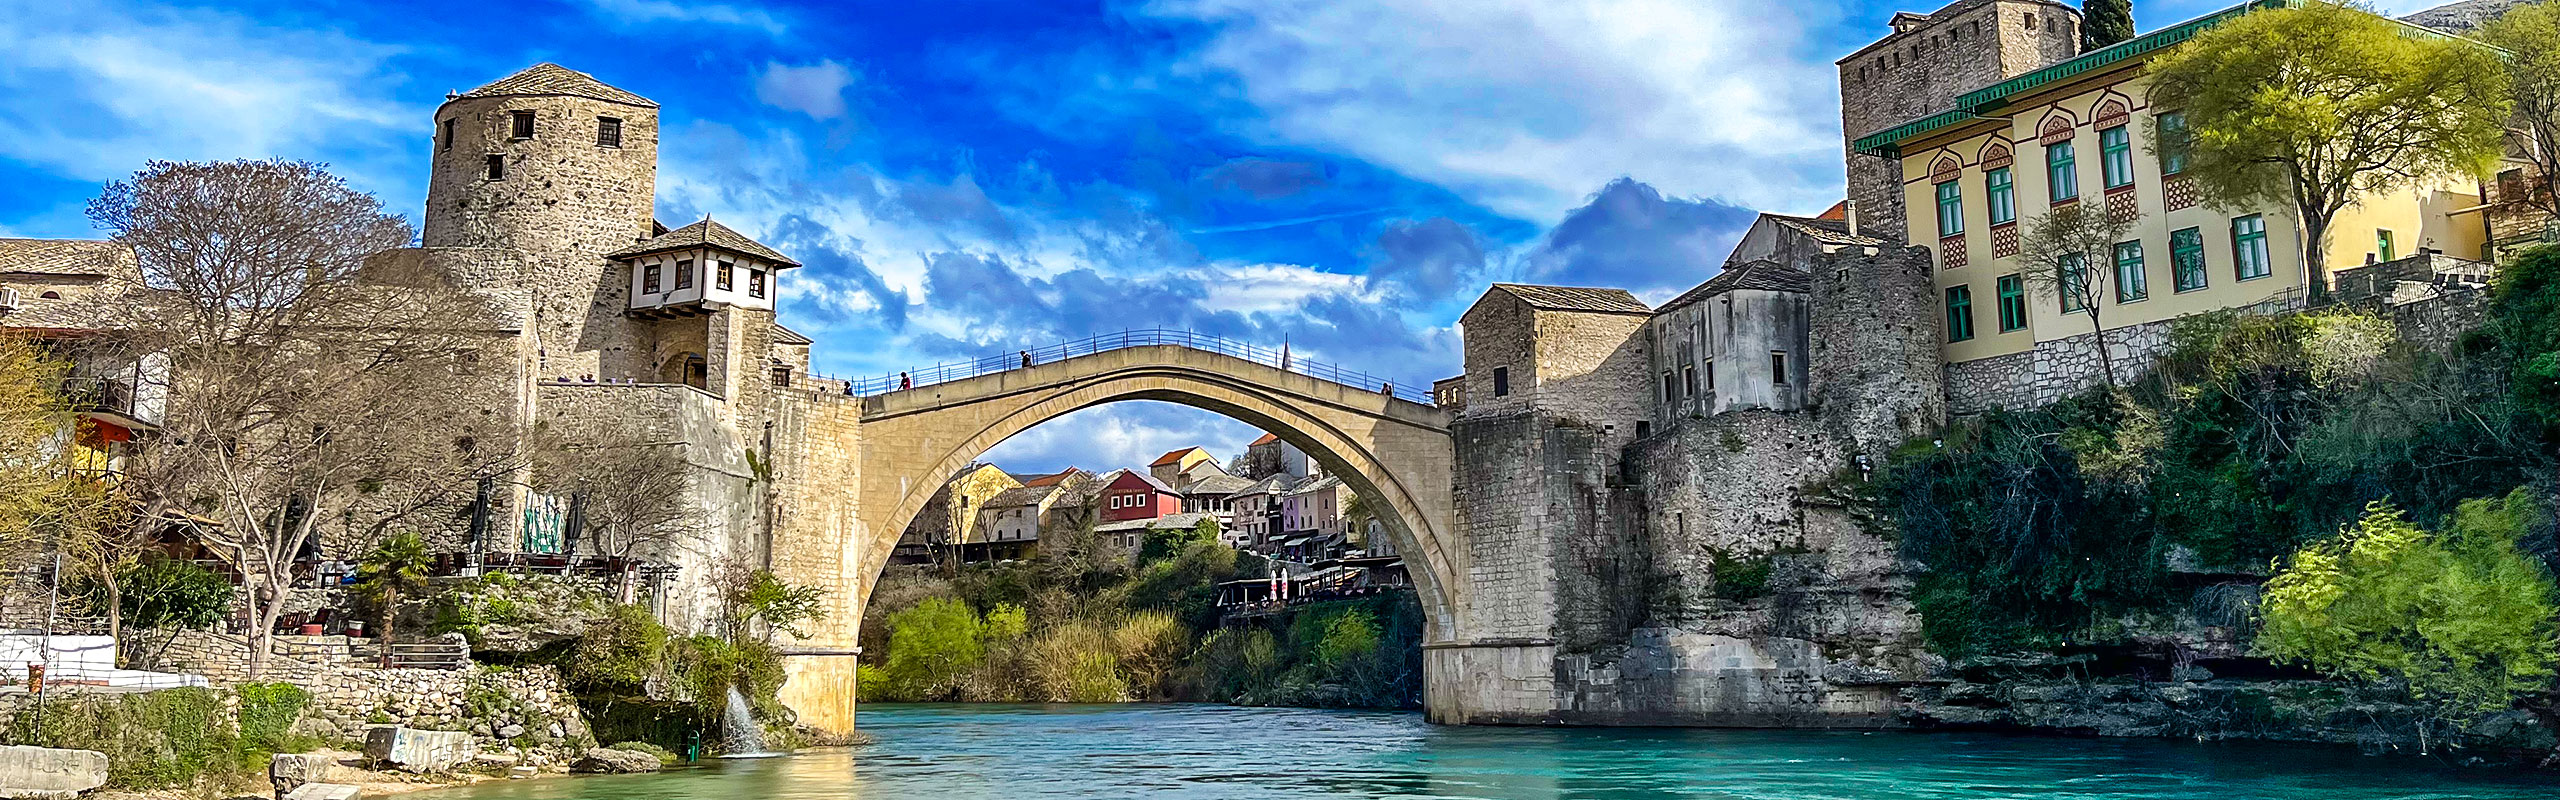 Mostar Old Bridge, Herzegovina